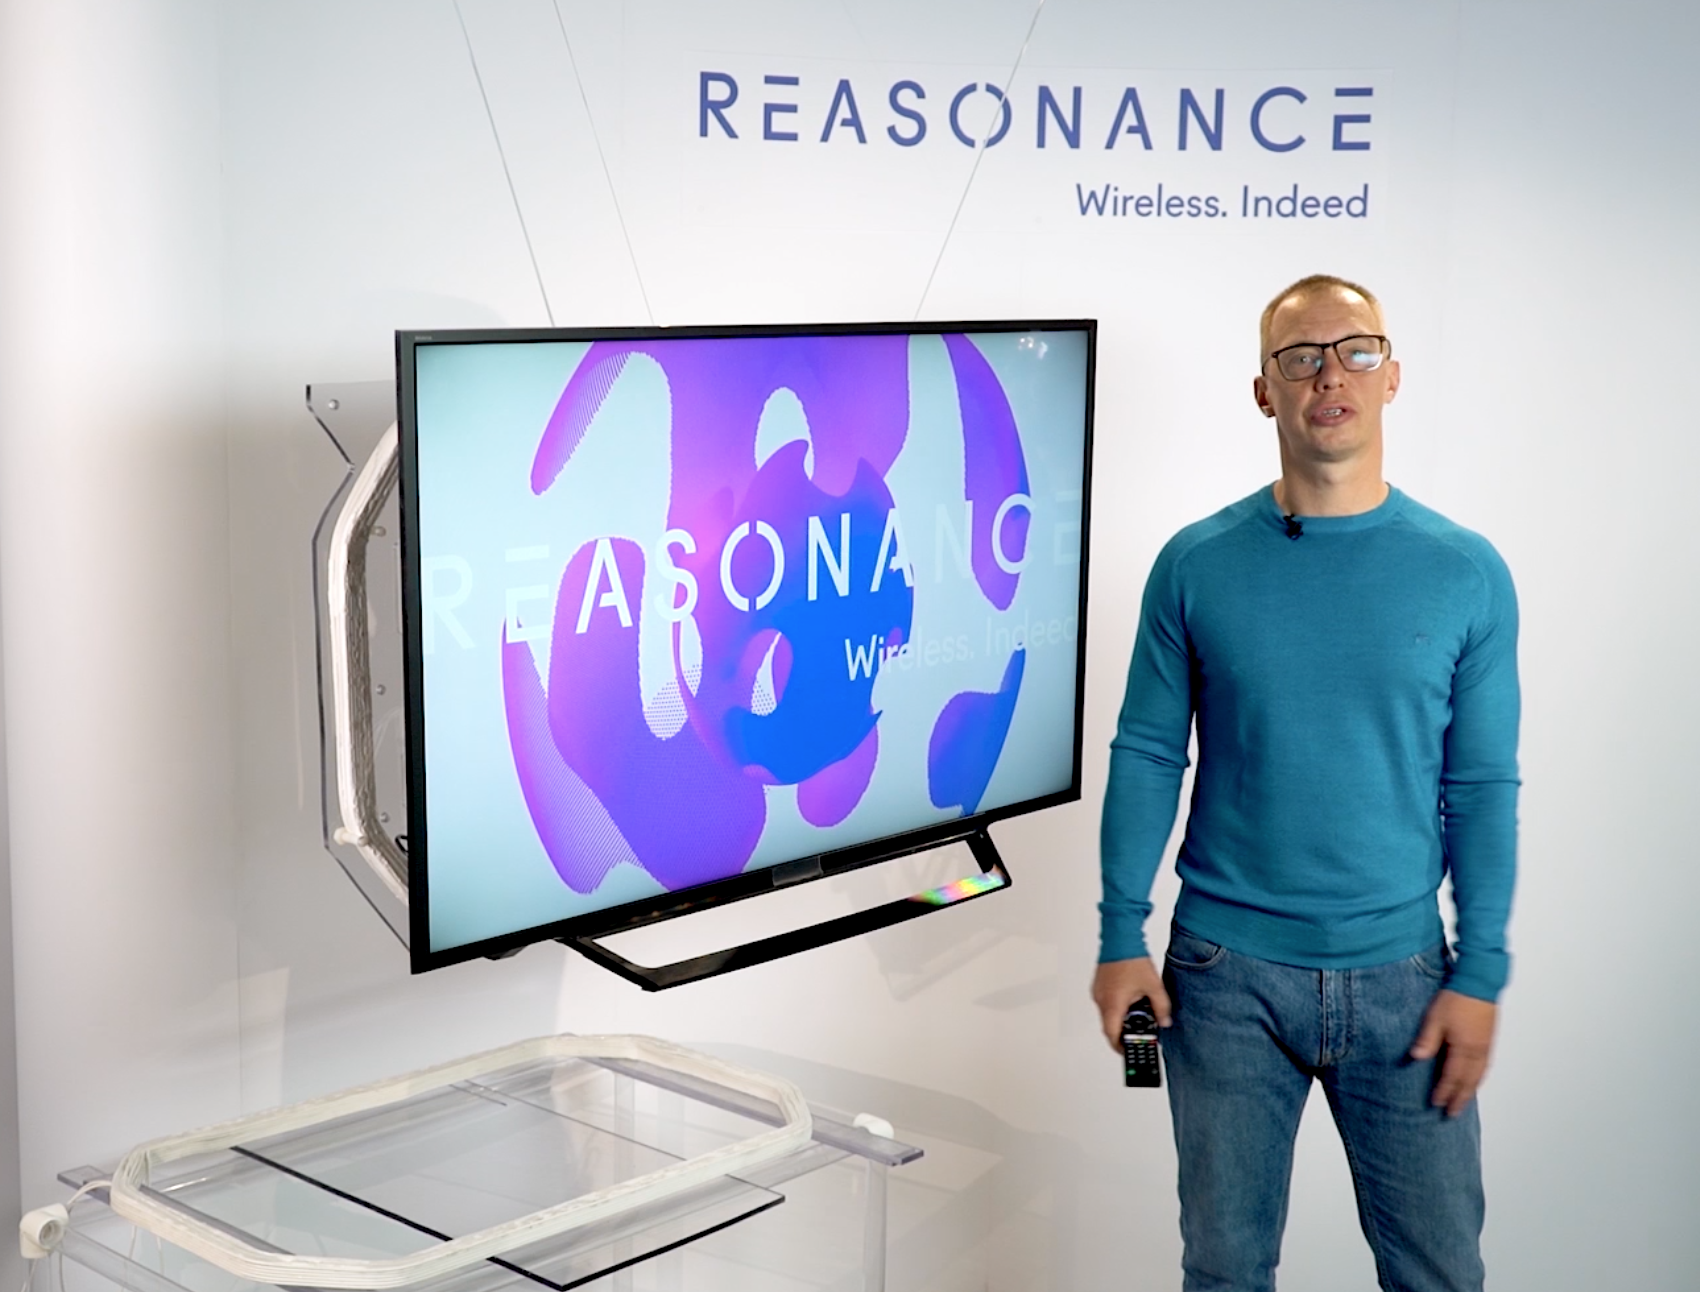 REASONANCE has presented wireless TV at the Wireless Power Week in Seoul